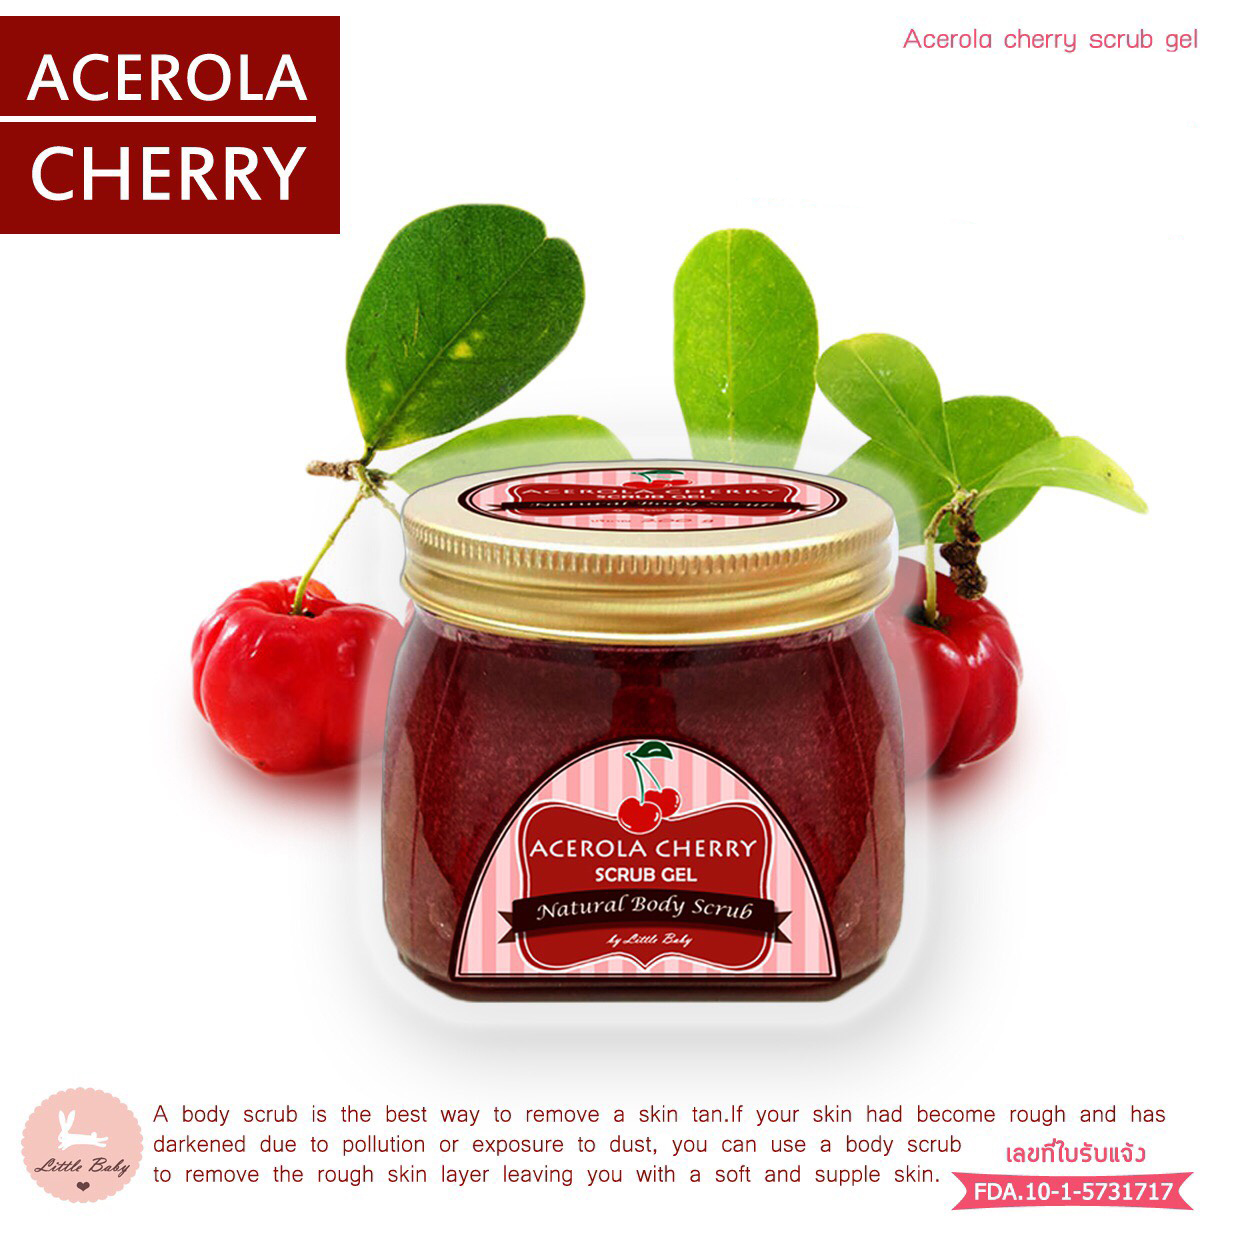 Acerola cherry scrub gel by Little Baby